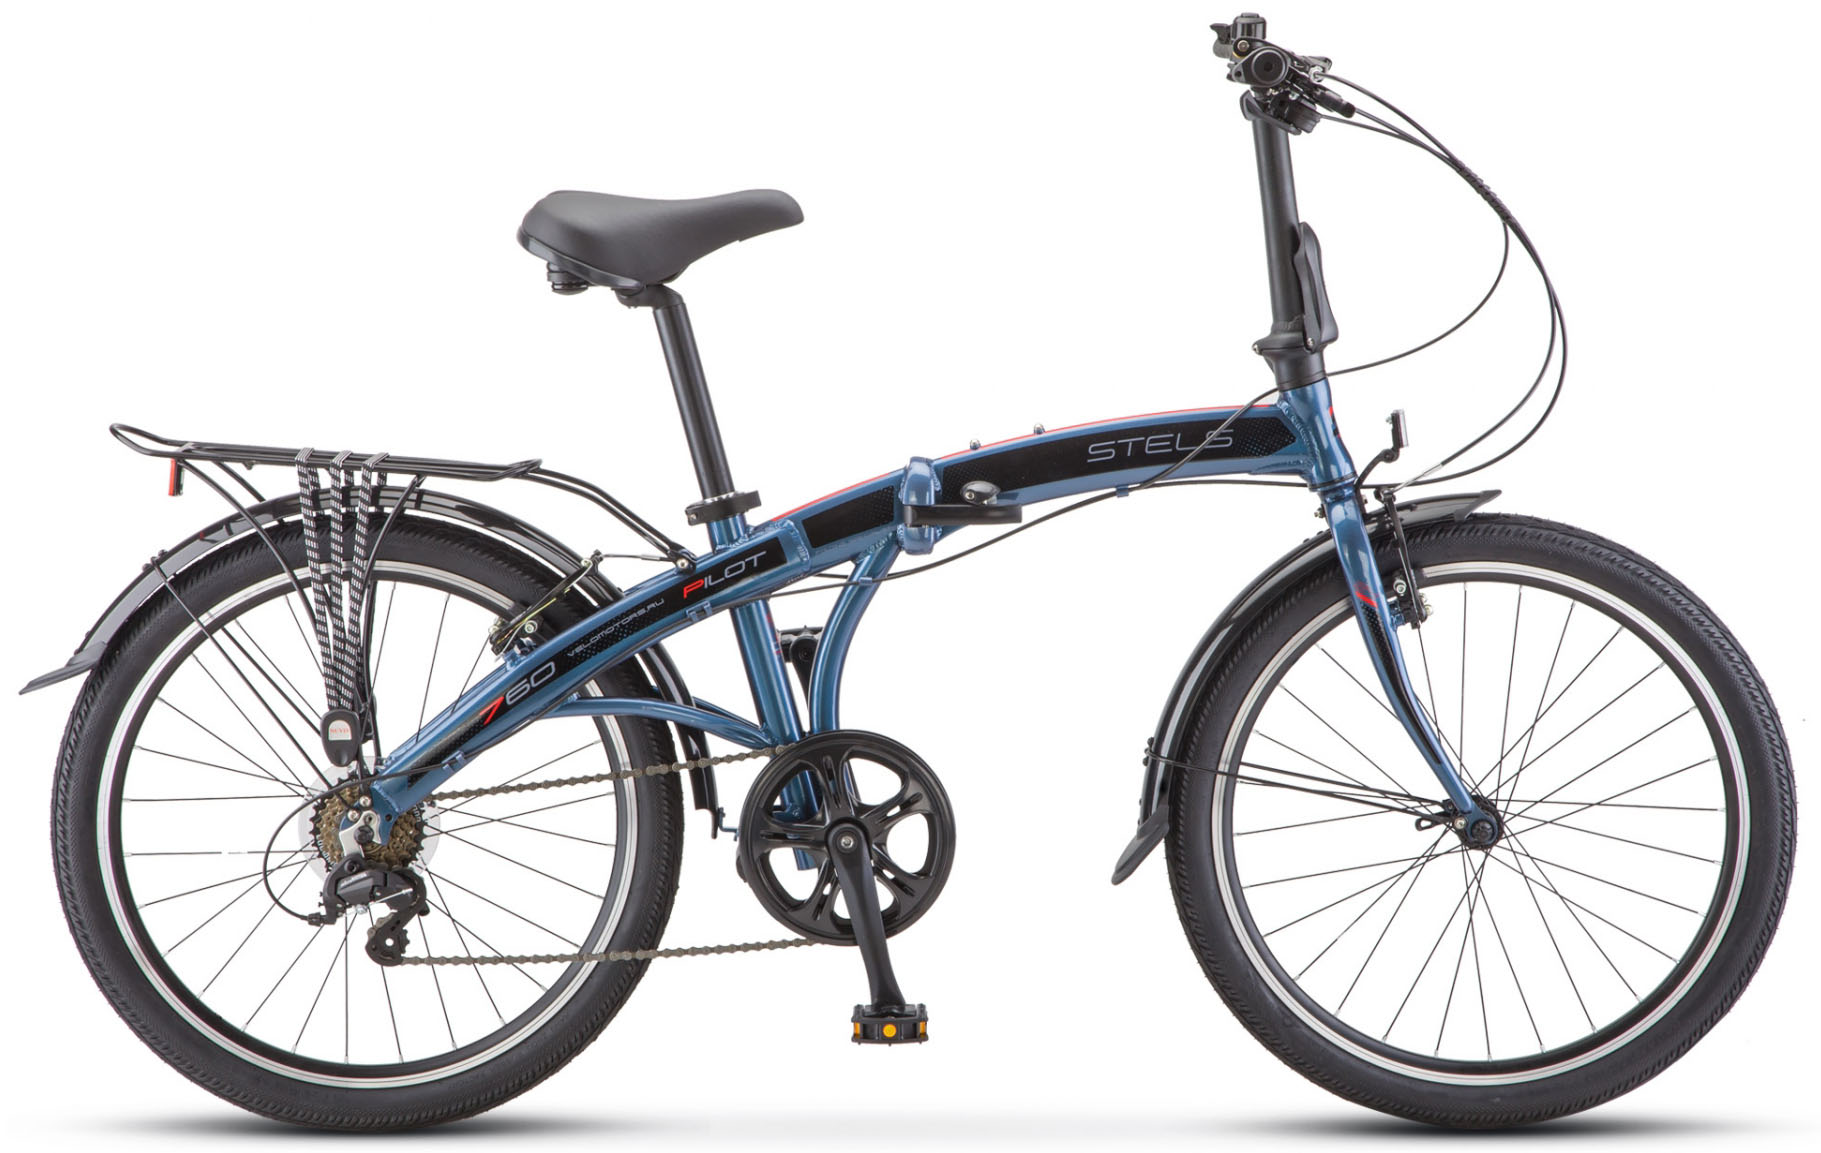  Велосипед Stels Pilot 760 24 V010 2019